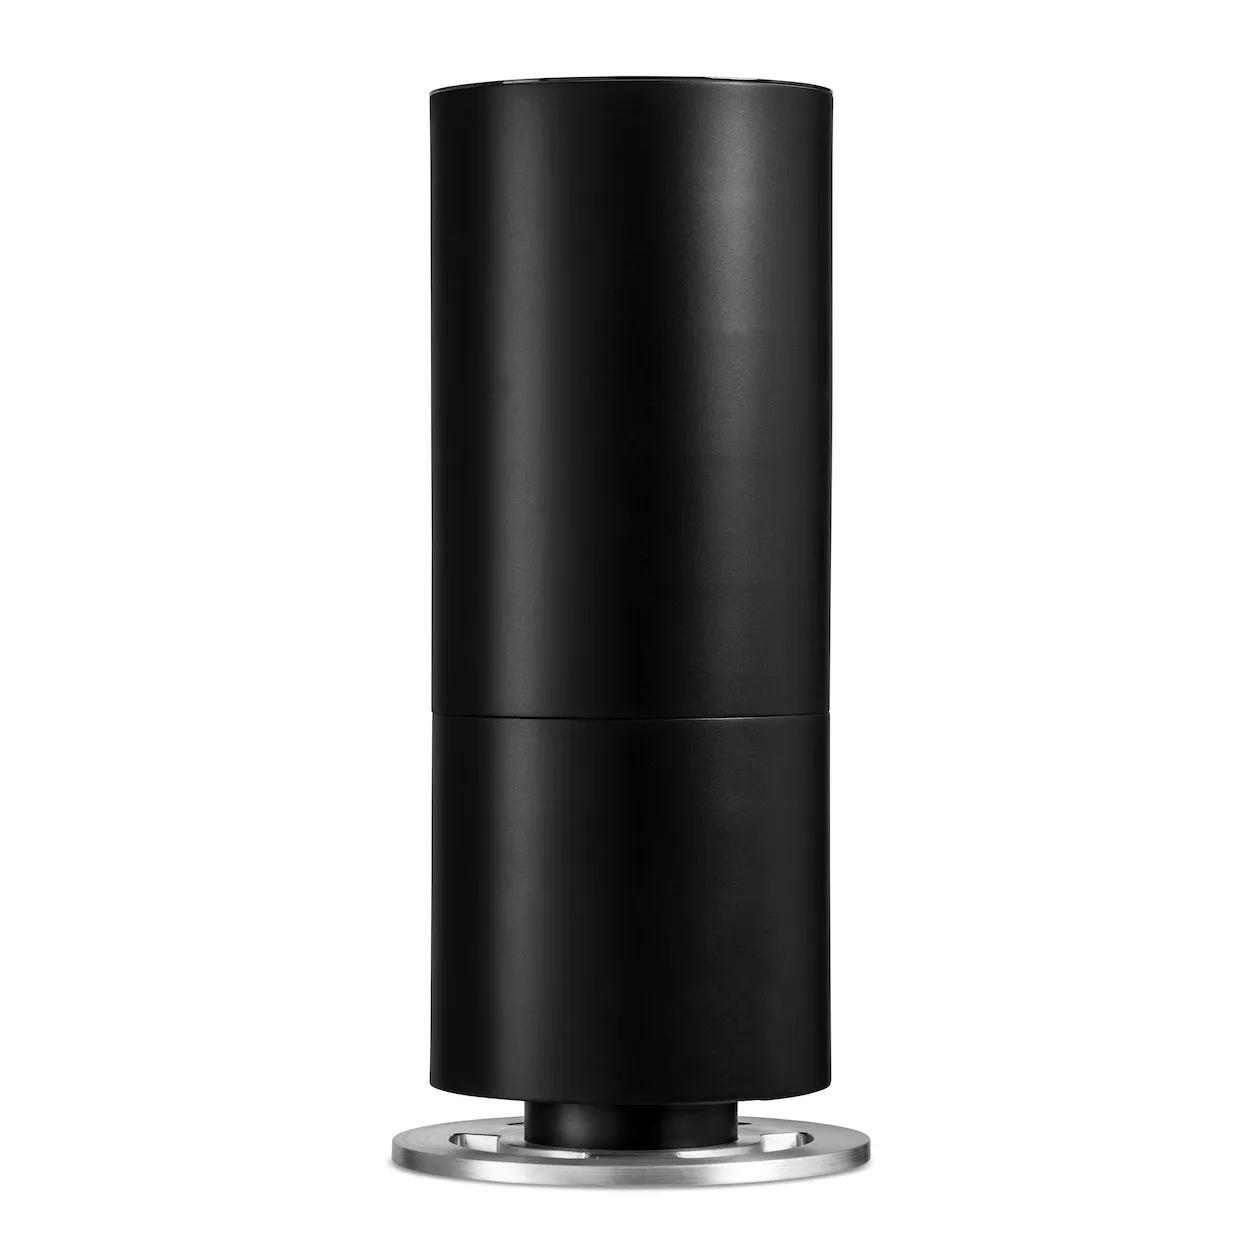 Duux Beam Mini Smart Ultrasonic Humidifier (Gen 2) Zwart